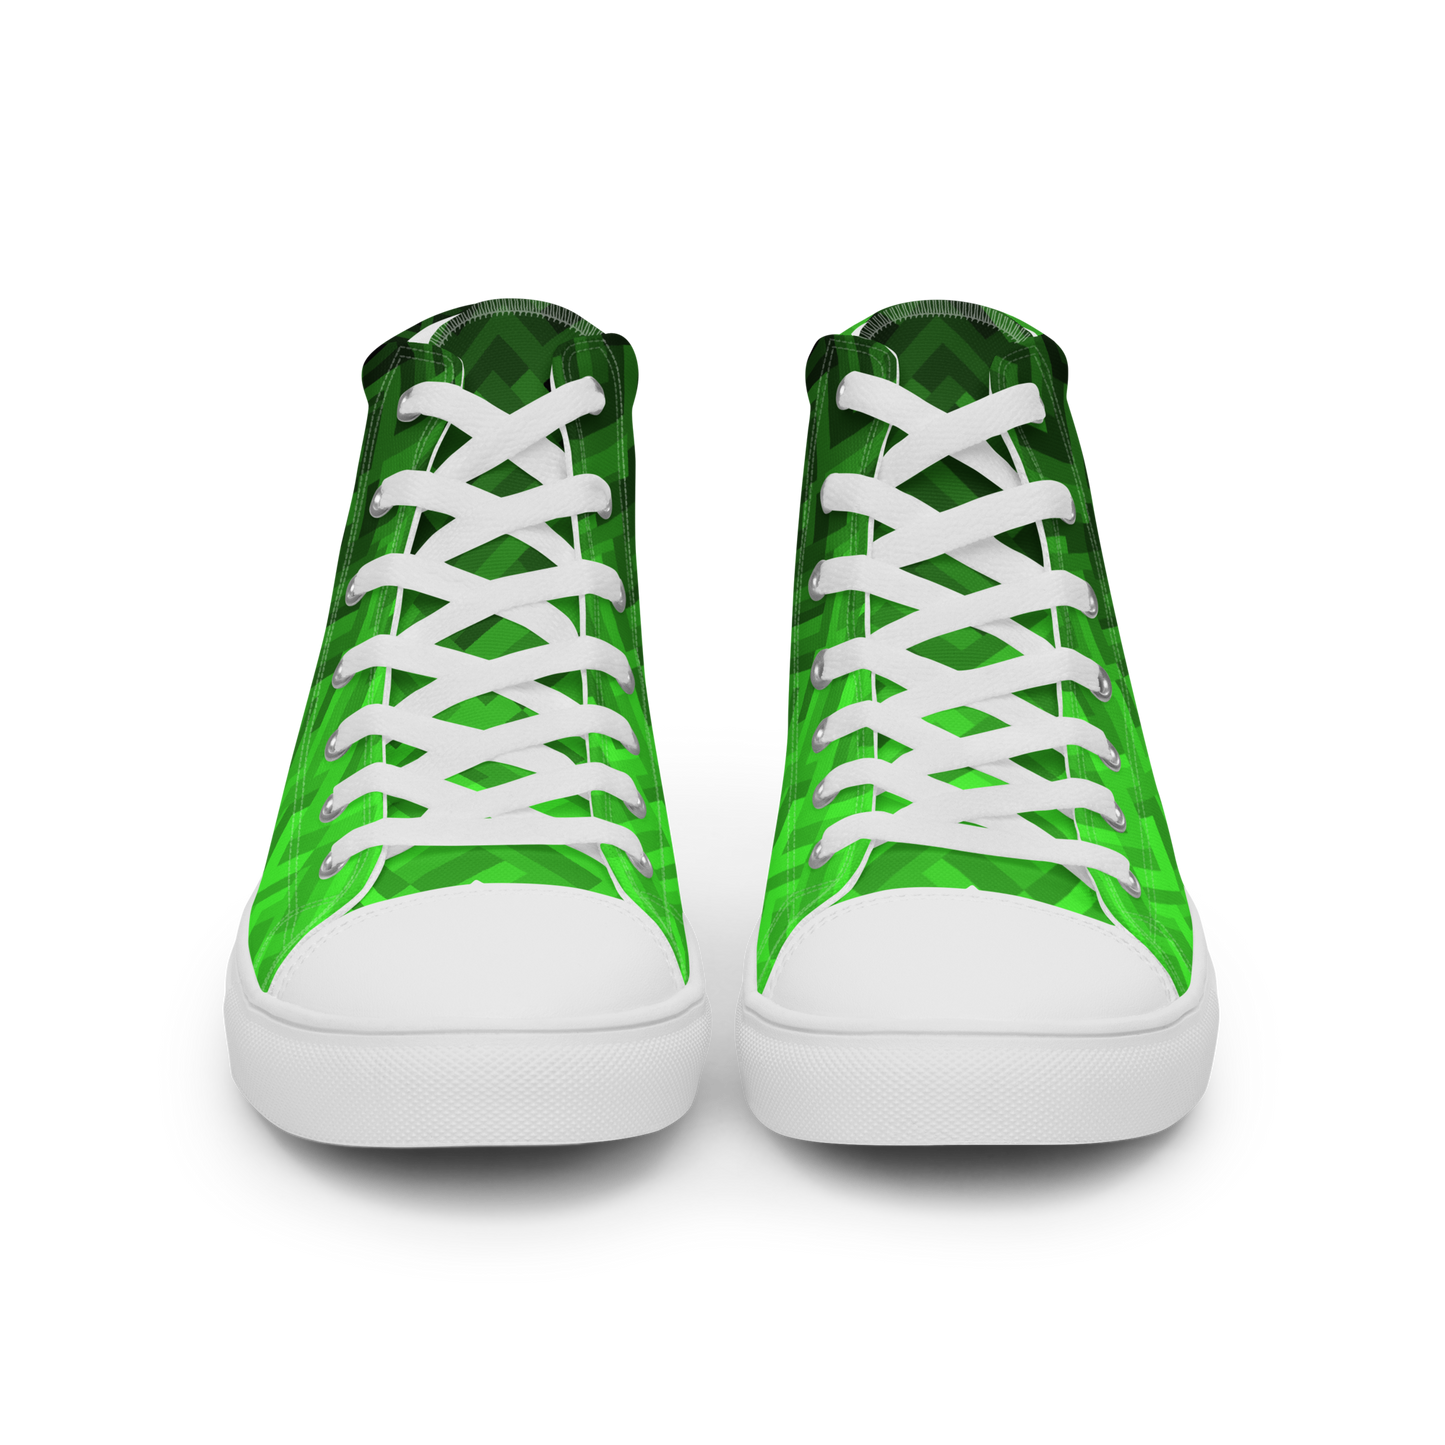 Men's Canvas Sneakers ❯ Polygonal Gradient ❯ Matrix